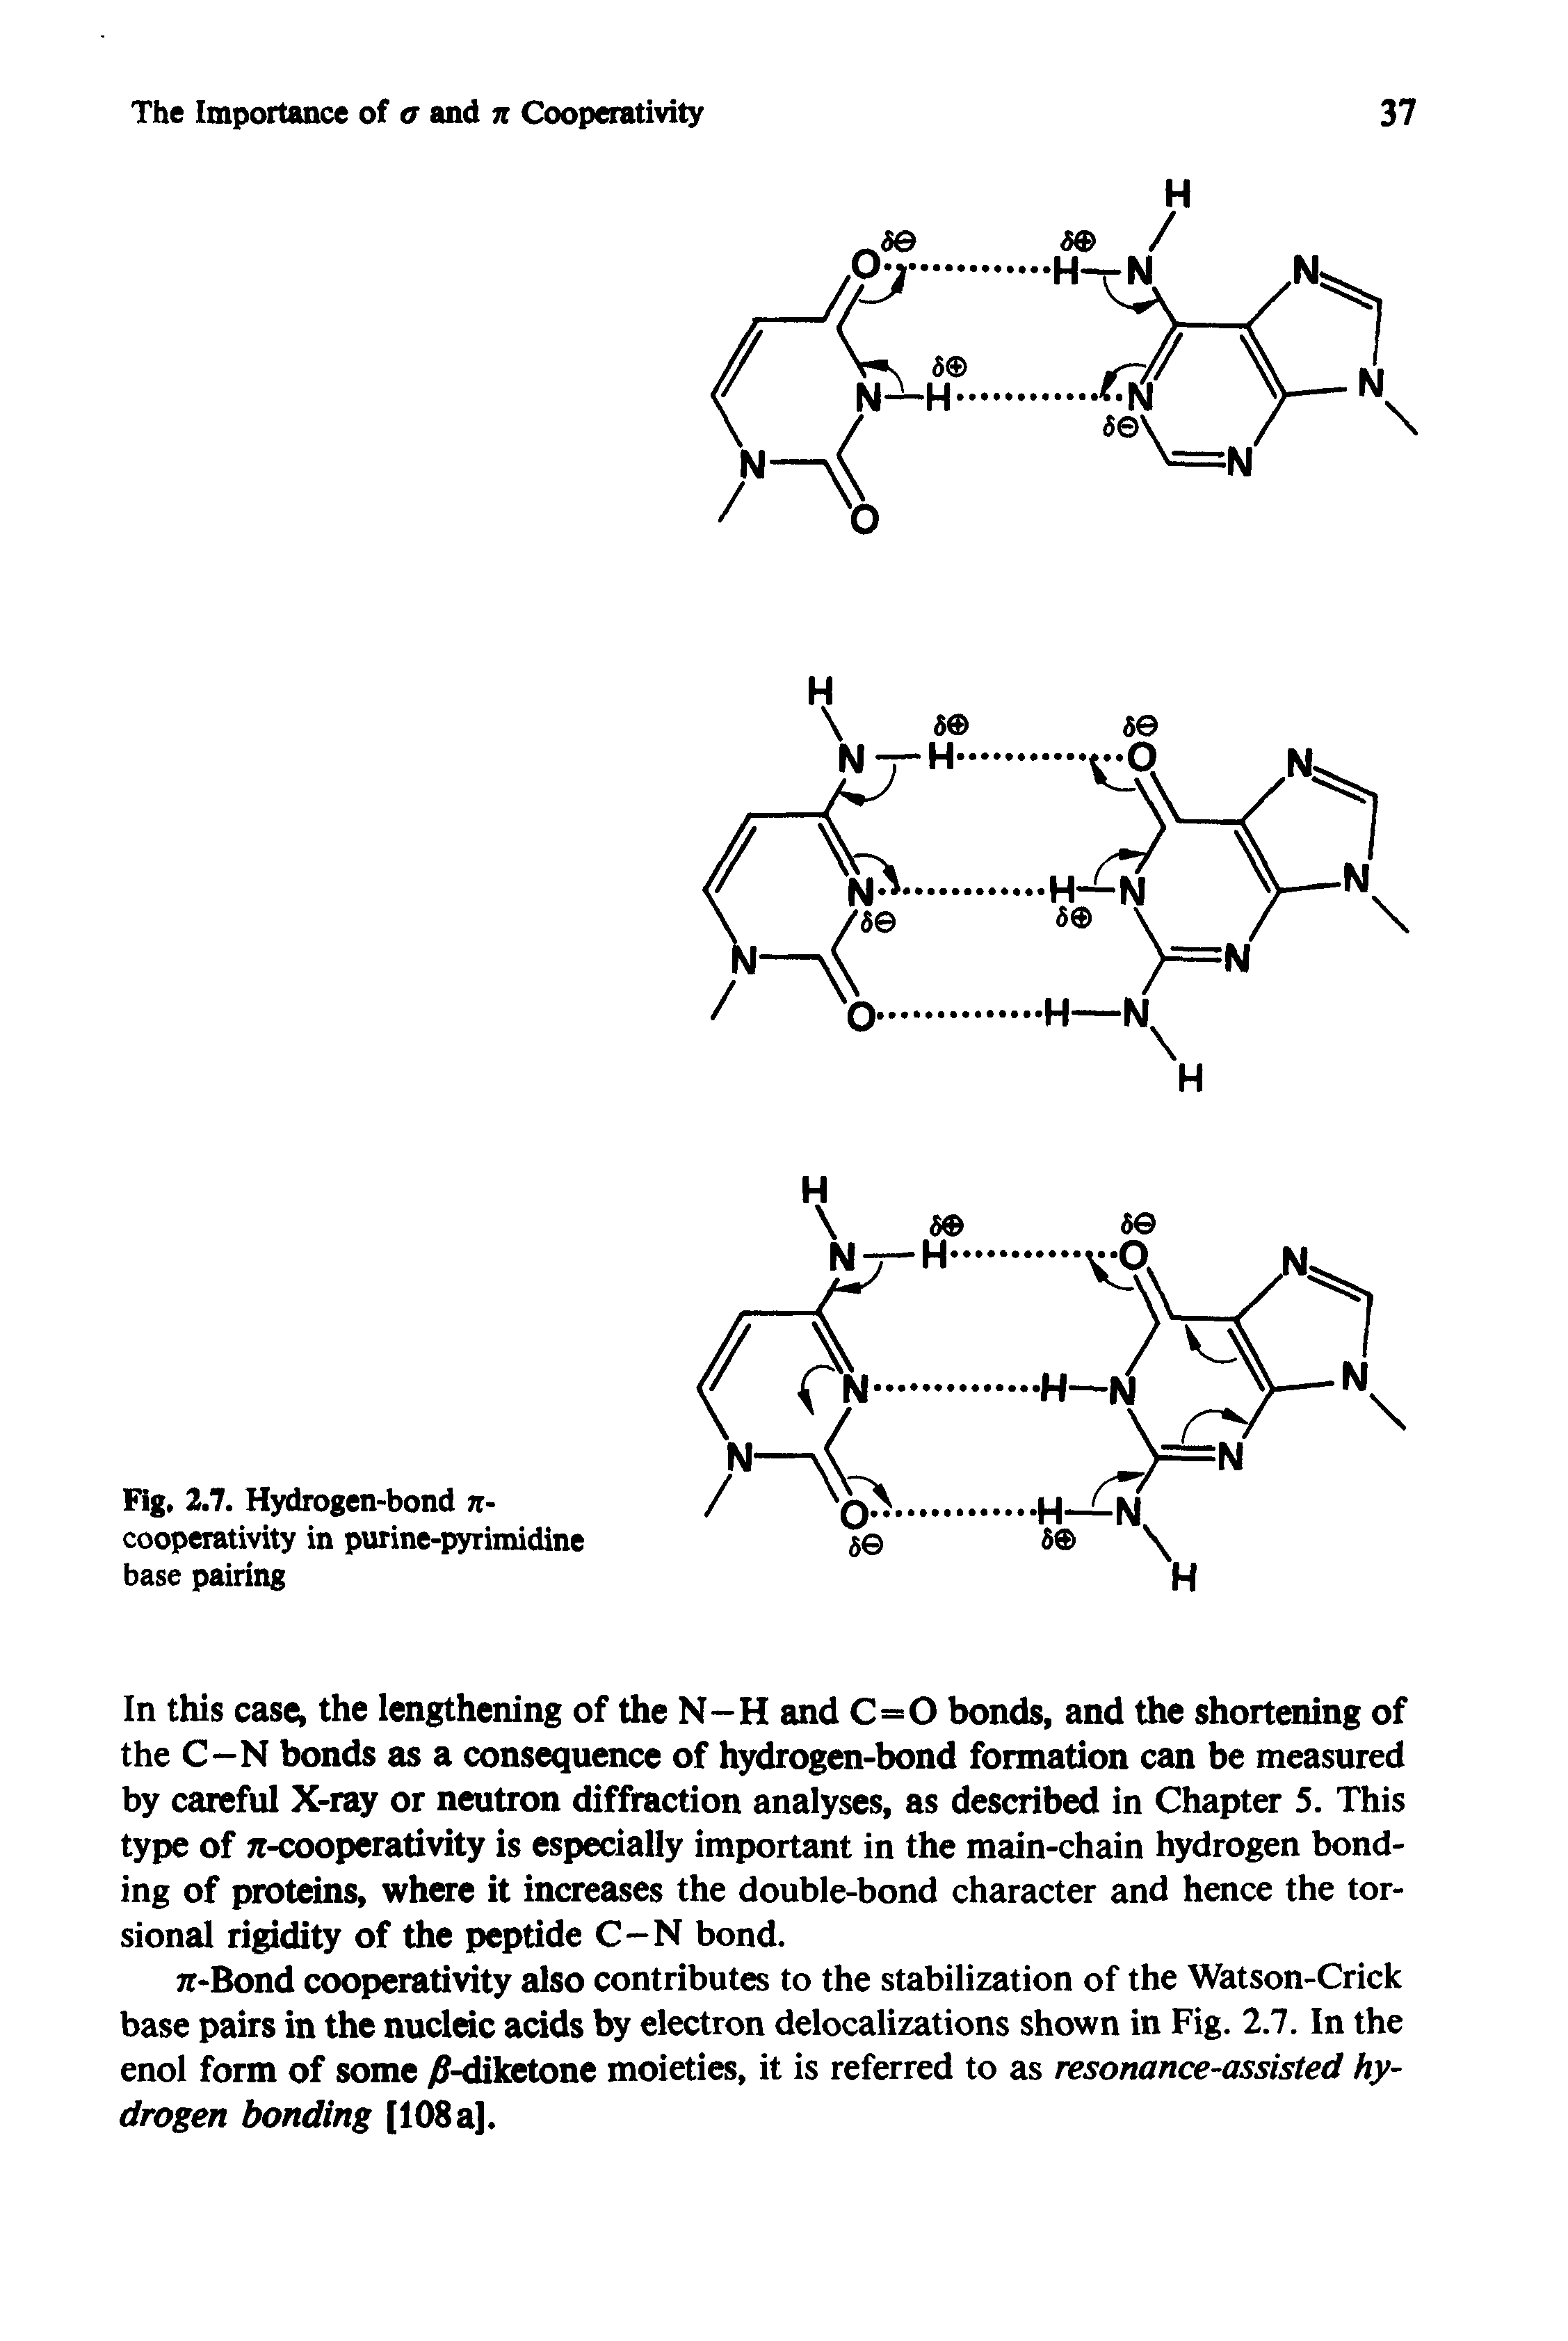 Fig. 2.7. Hydrogen-bond n-cooperativity in purine-pyrimidine base pairing...